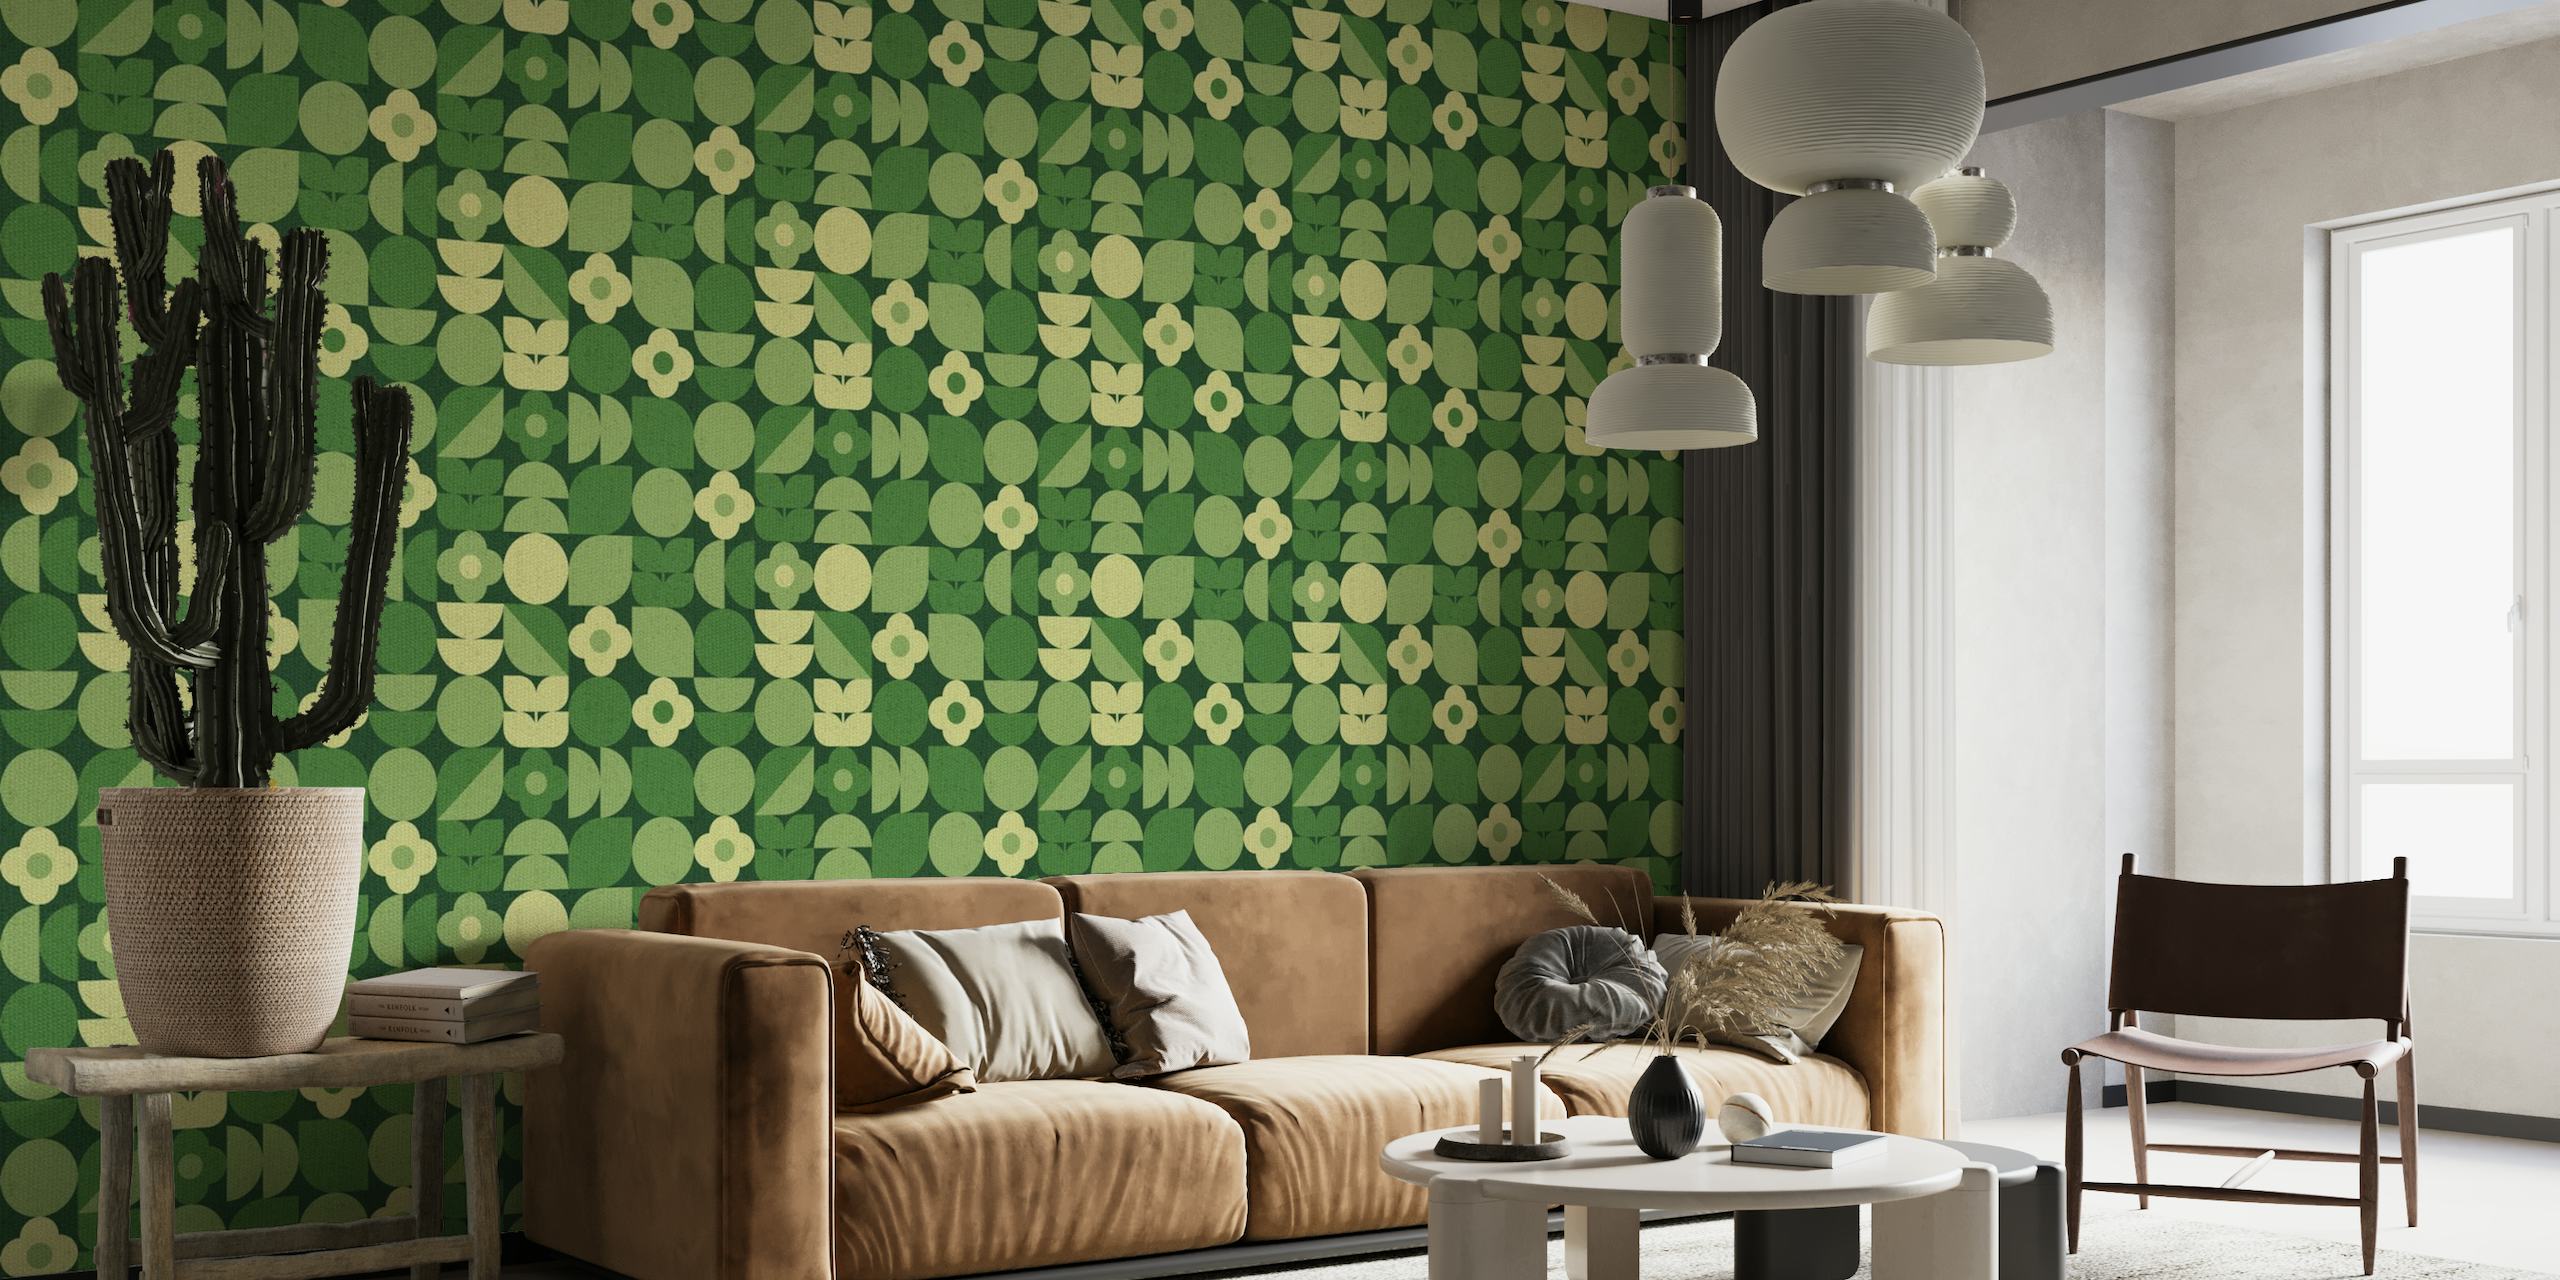 Geo Bauhaus Green Floral Shapes carta da parati